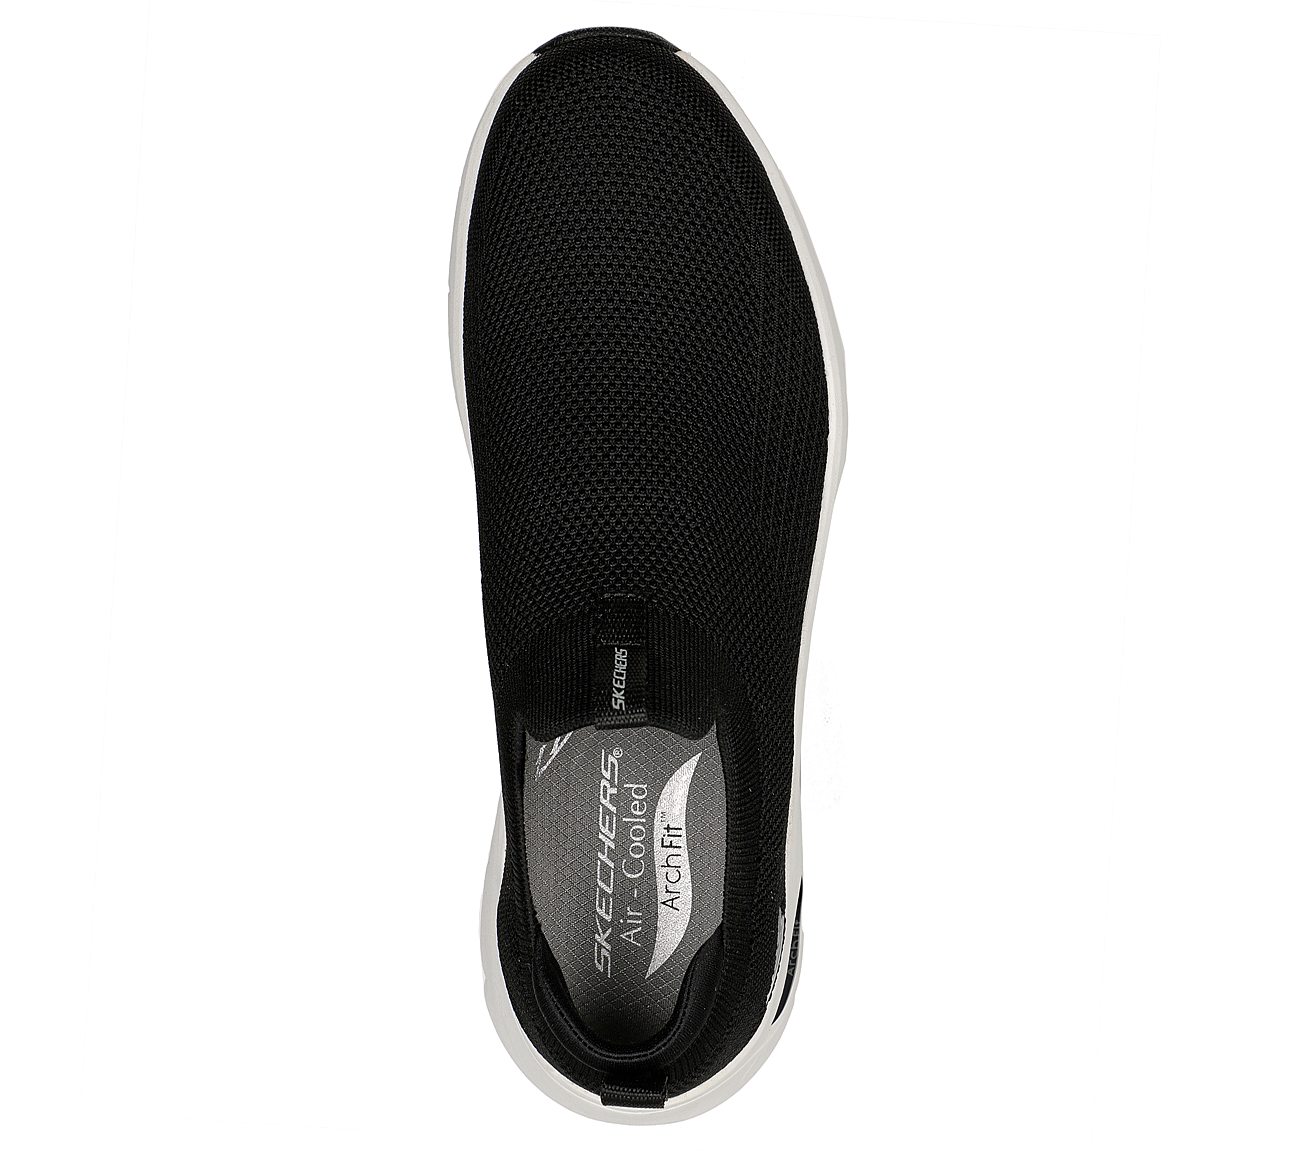 SKECH-AIR ARCH FIT, BLACK/WHITE Footwear Top View